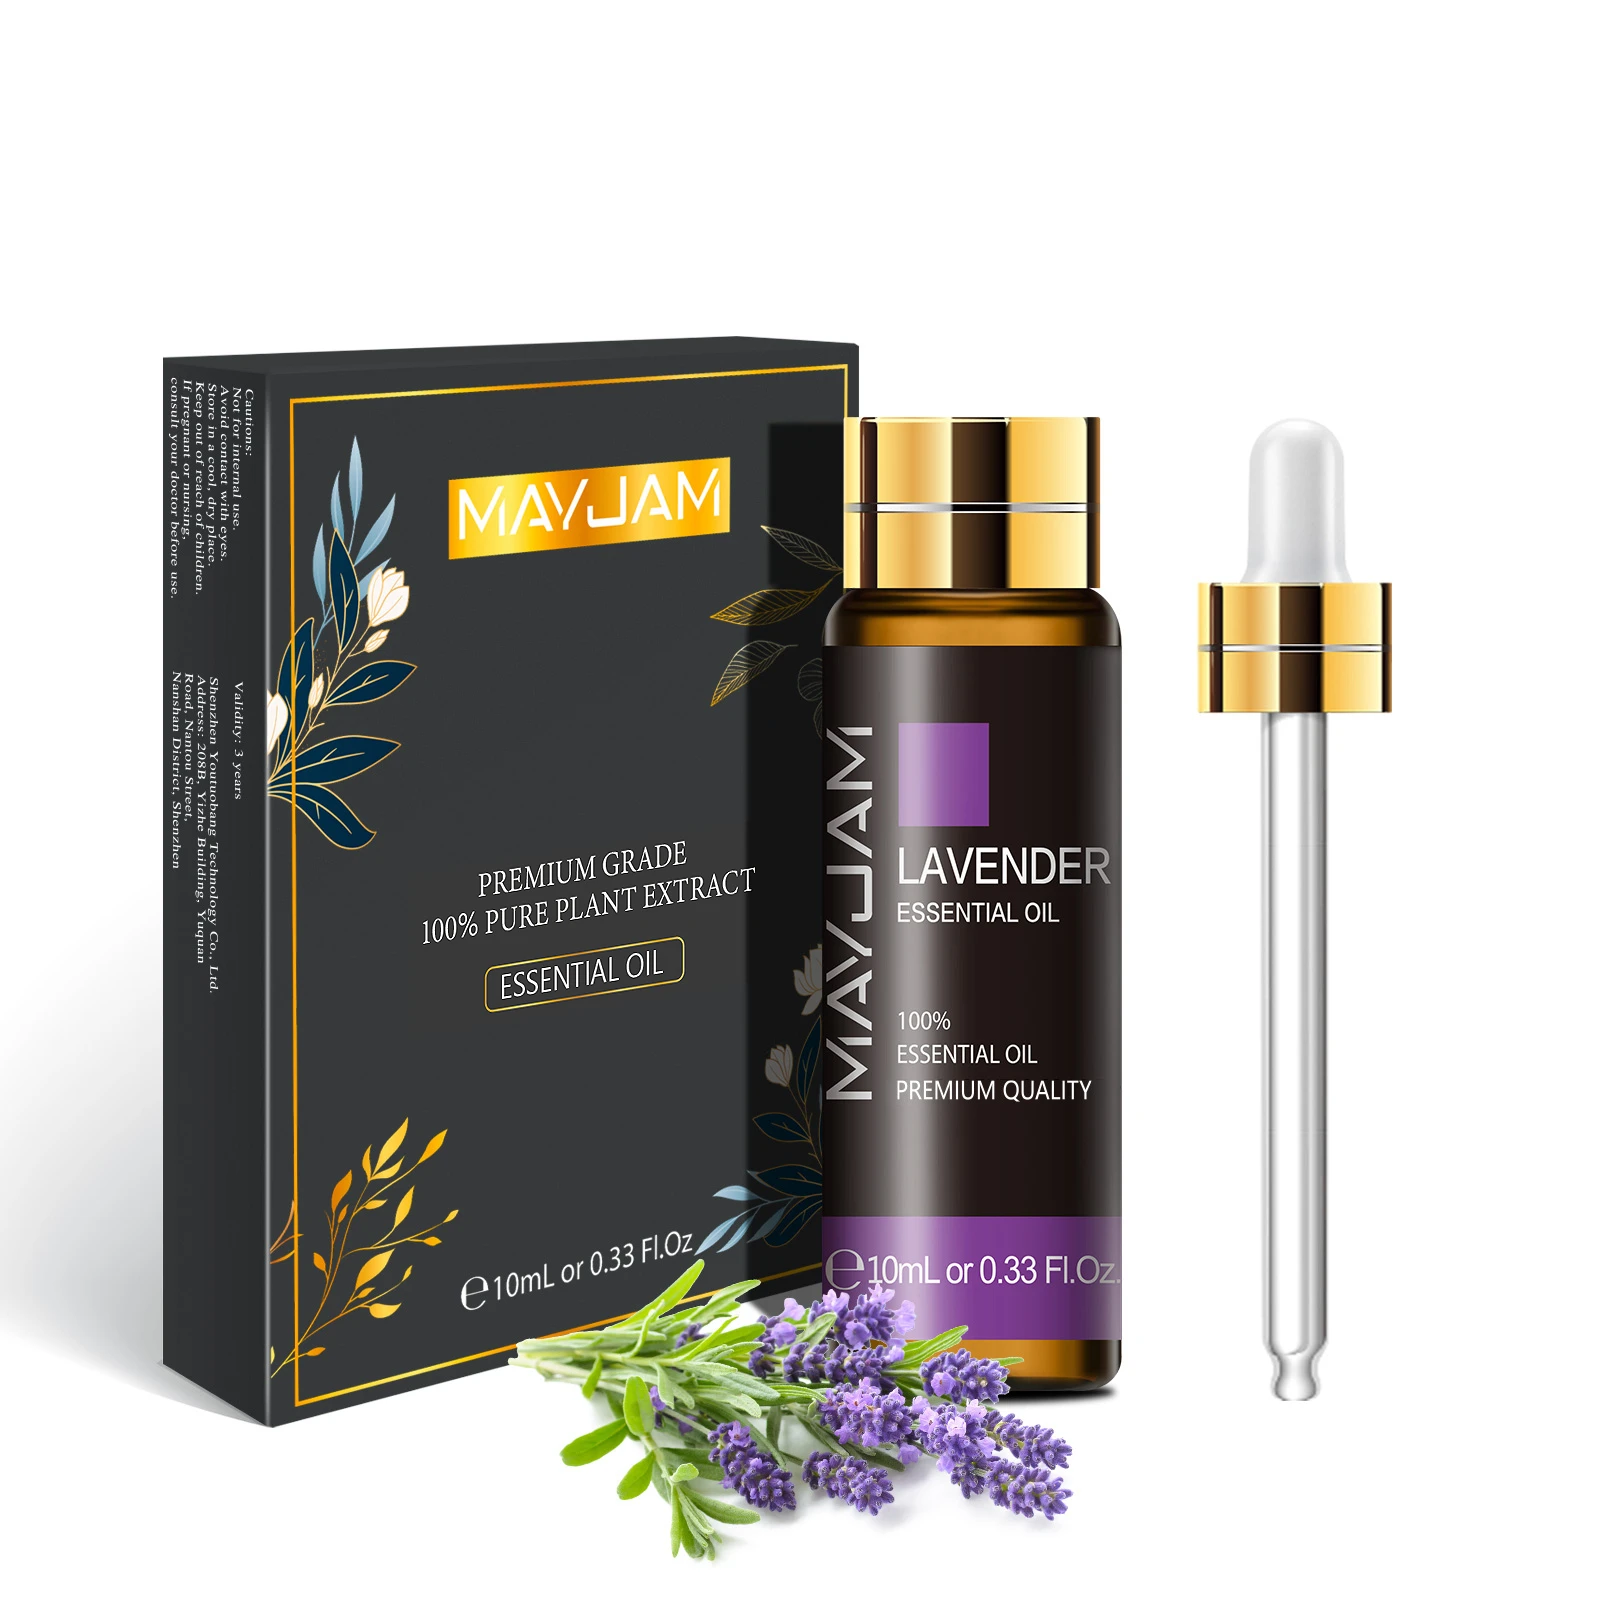 10m Lavender Essential Oil For Making Cuticle Oil Perfume Candle Soap Diffuser Oils Vanilla Sandalwood Jasmine